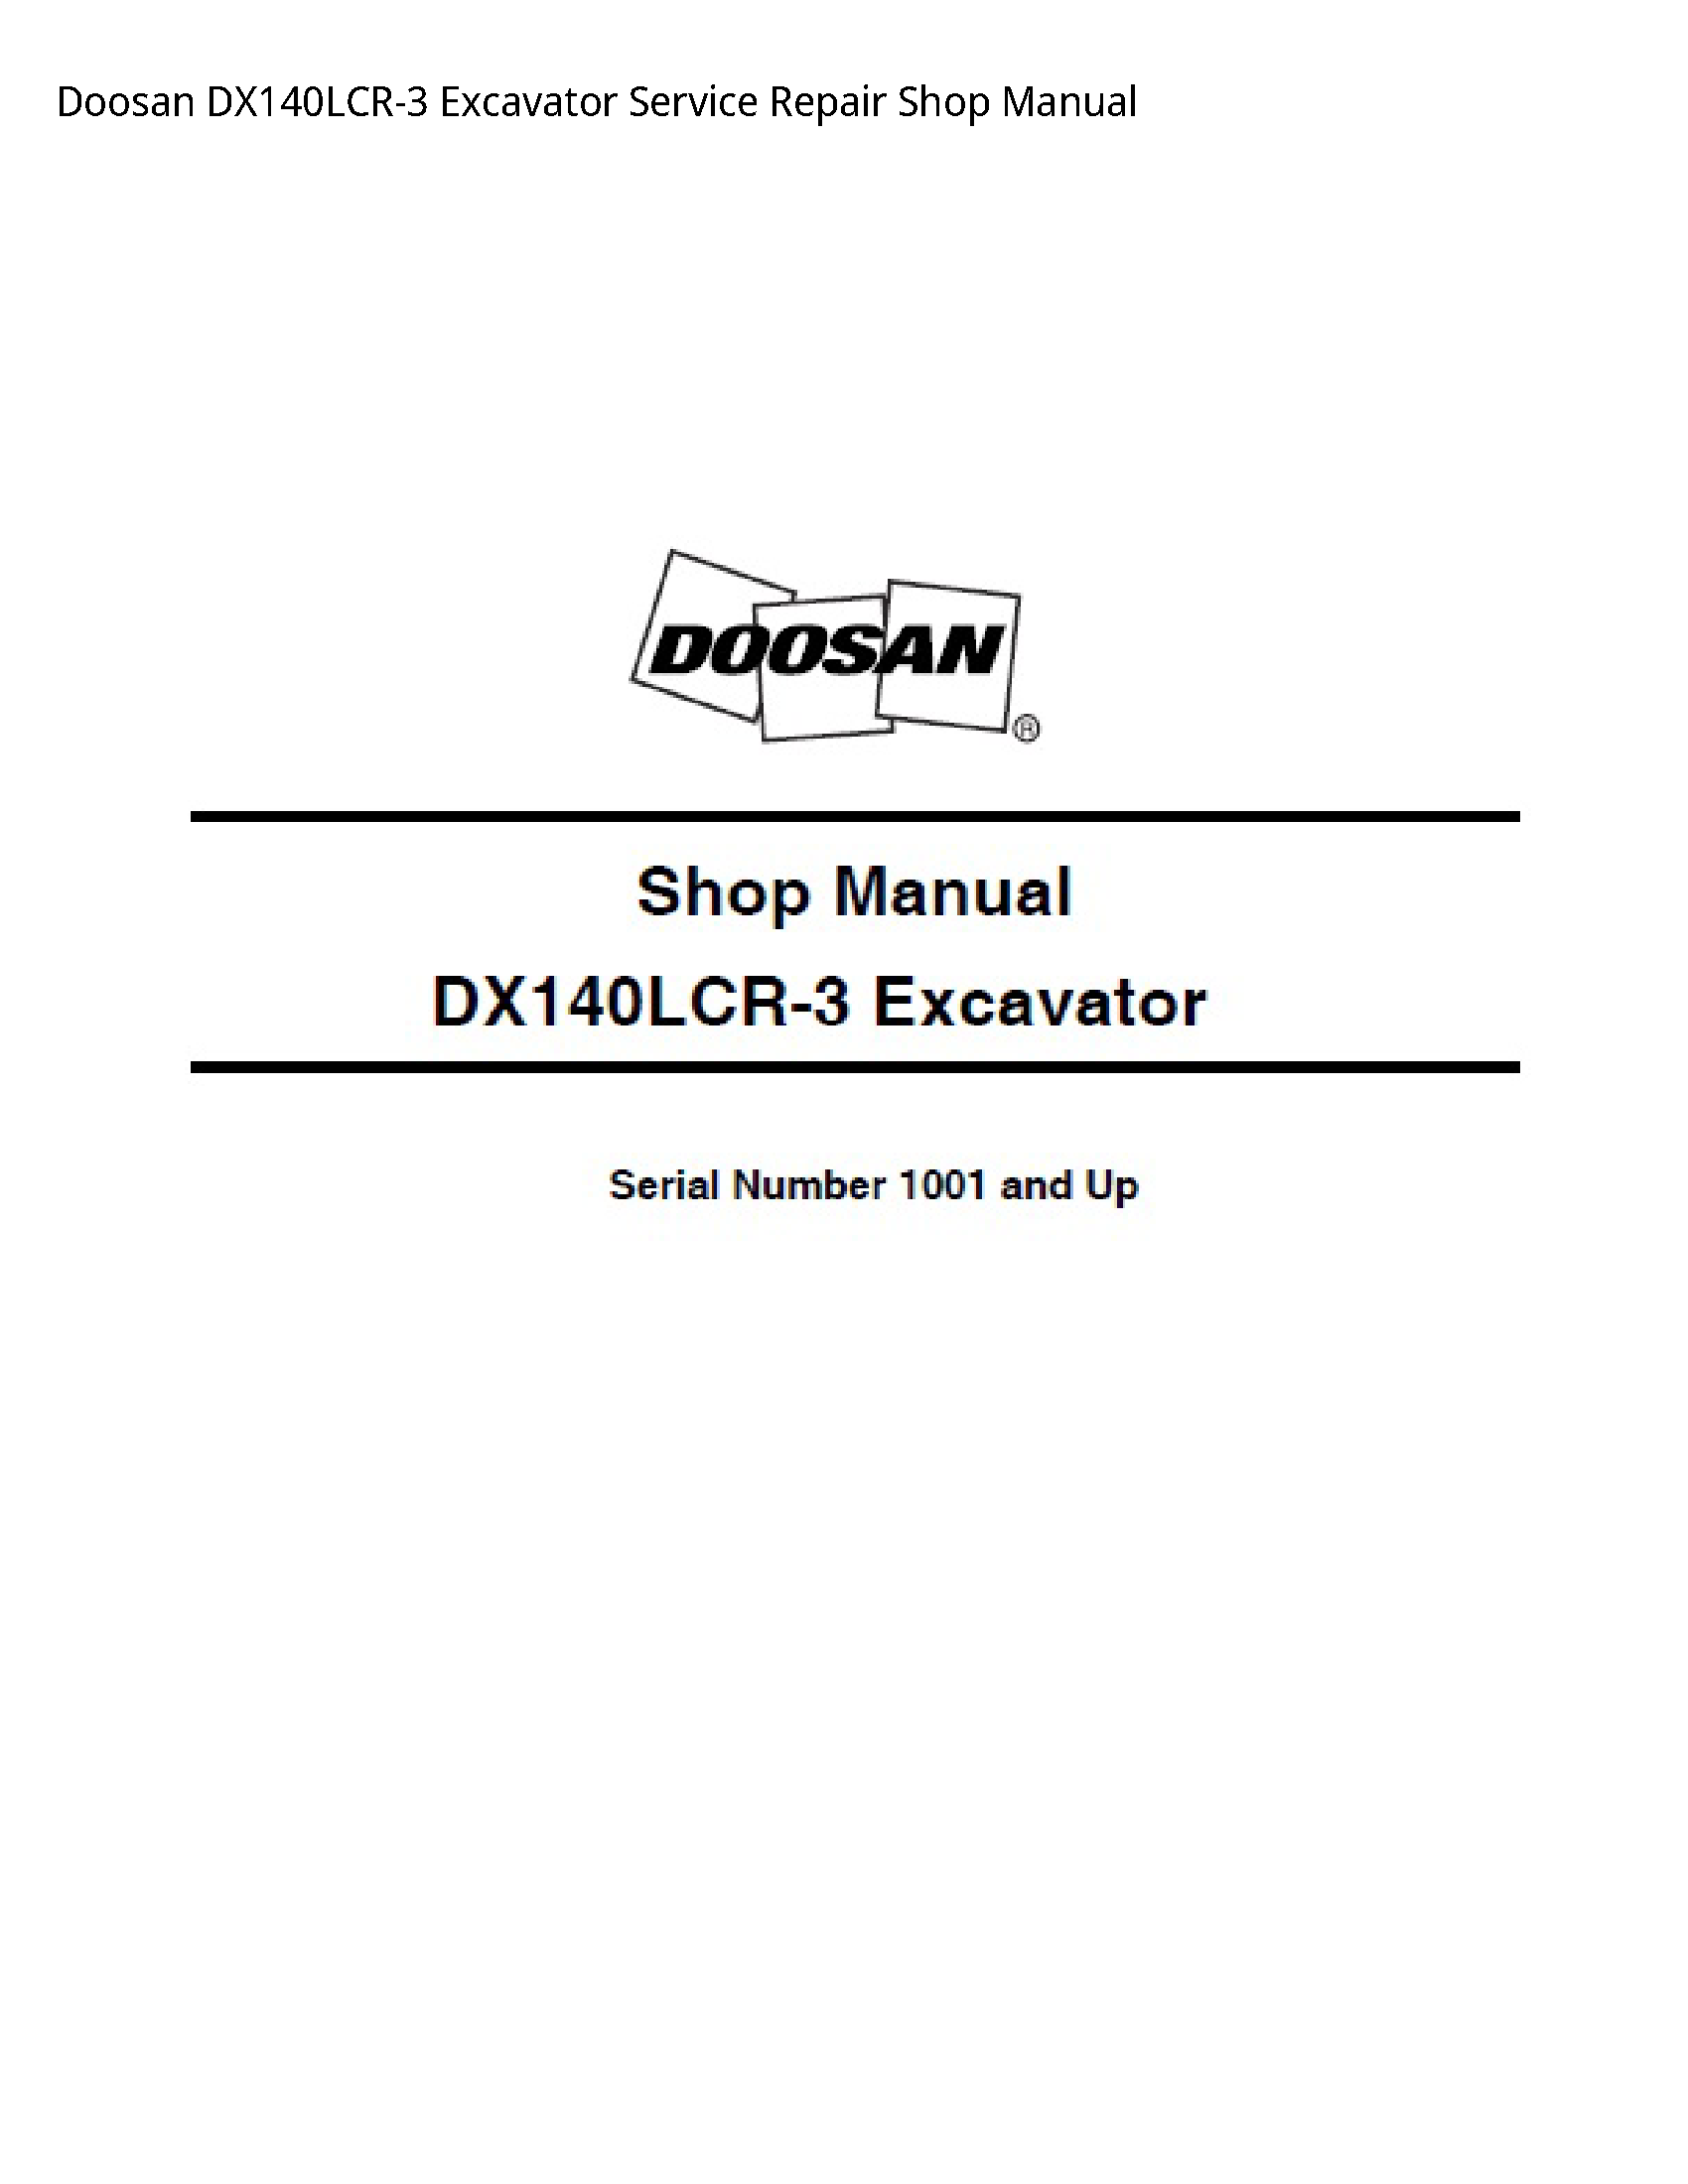 Doosan DX140LCR-3 Excavator manual